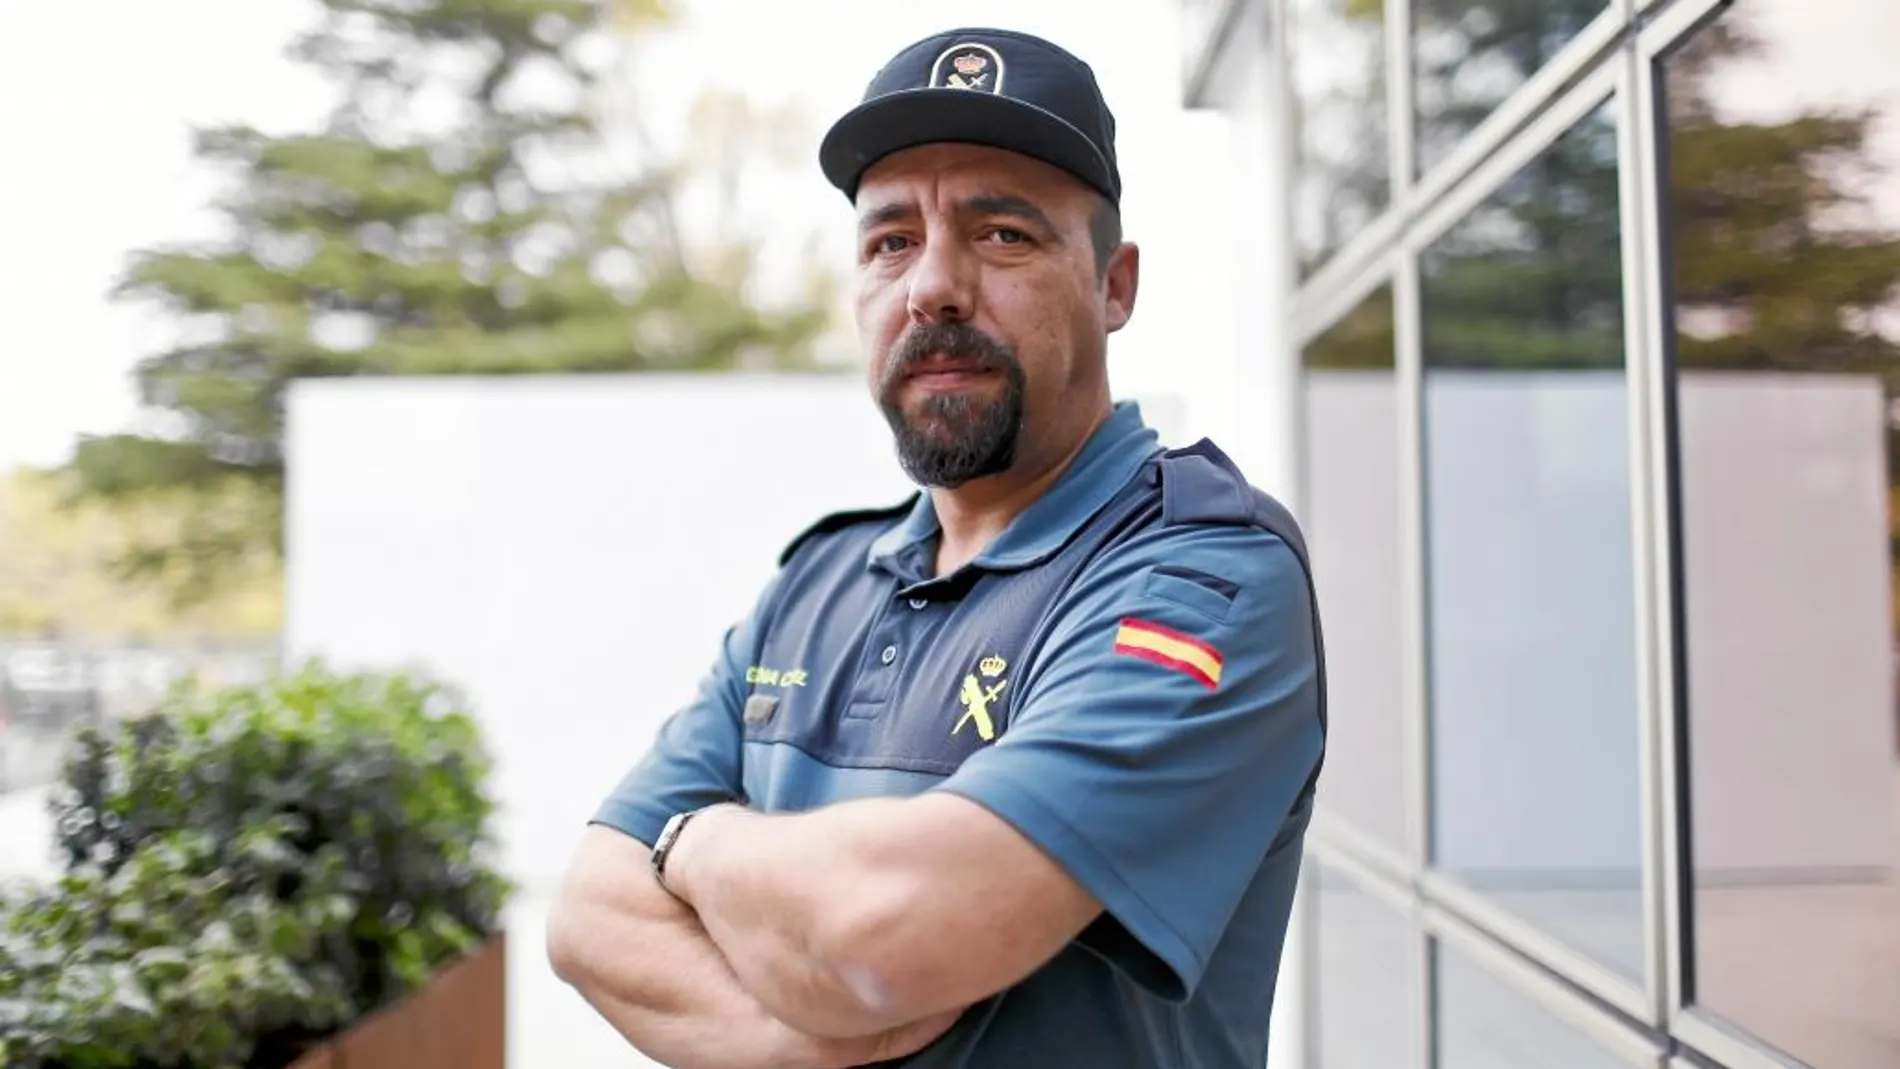 Raúl Lobato, guardia civil y vicepresidente segundo de la Asociación Española de Guardia Civiles (AEGC)